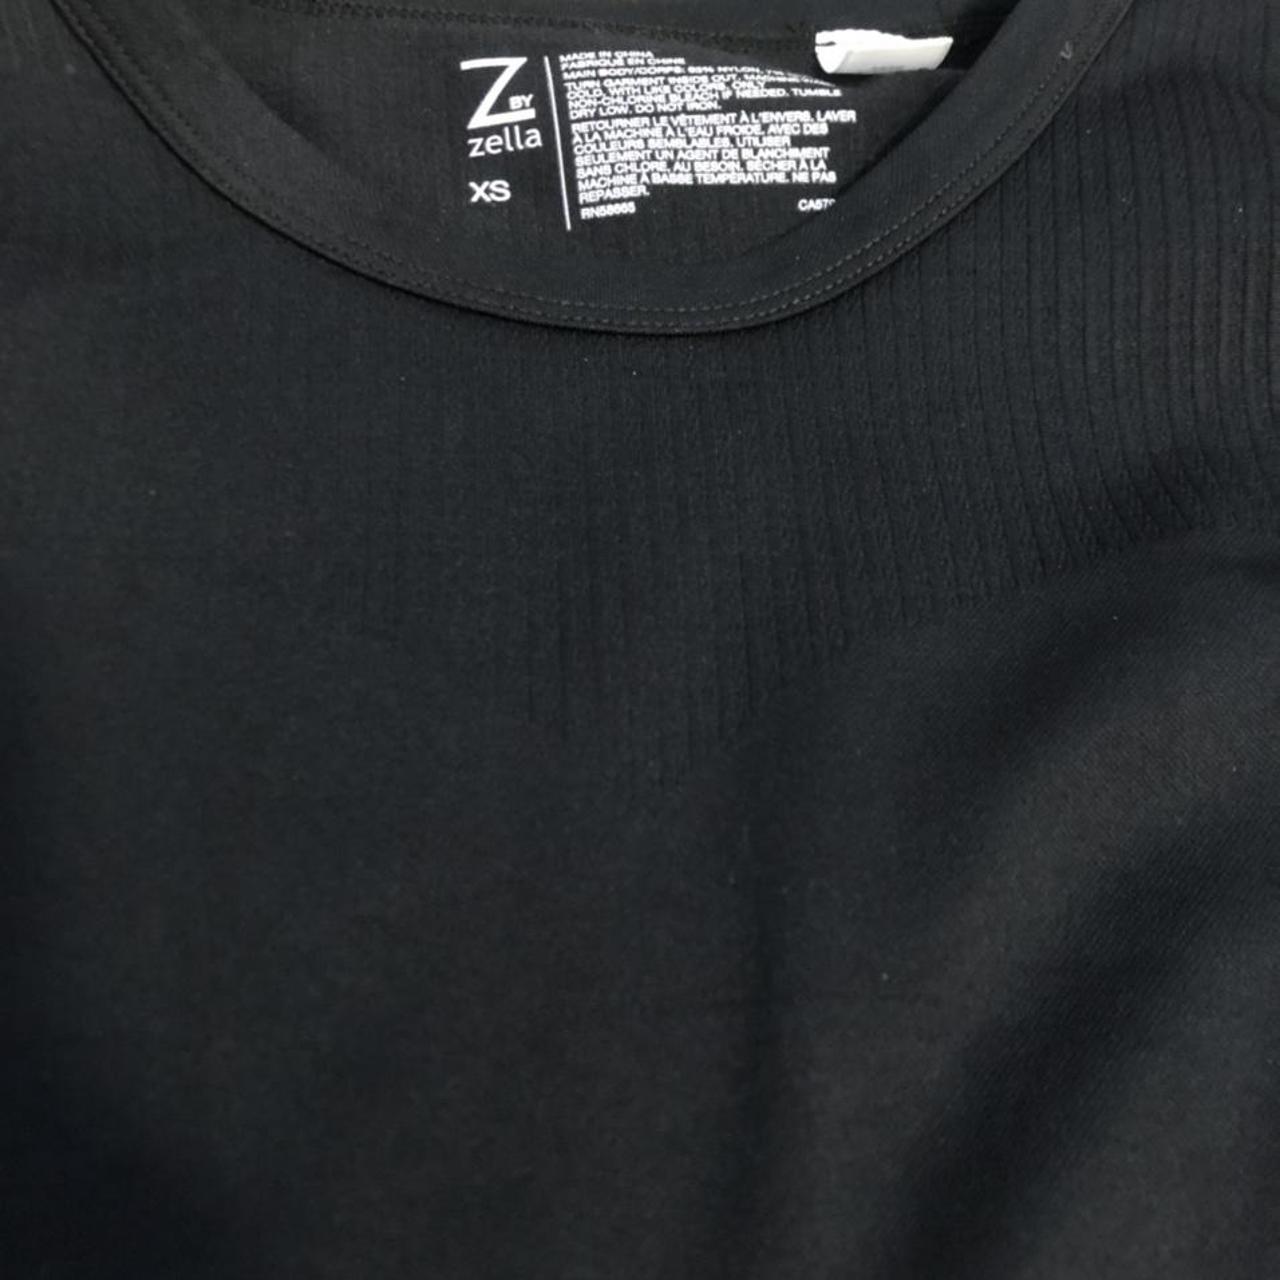 Cute tight fitting black crop shirt. Ridge detailing... - Depop